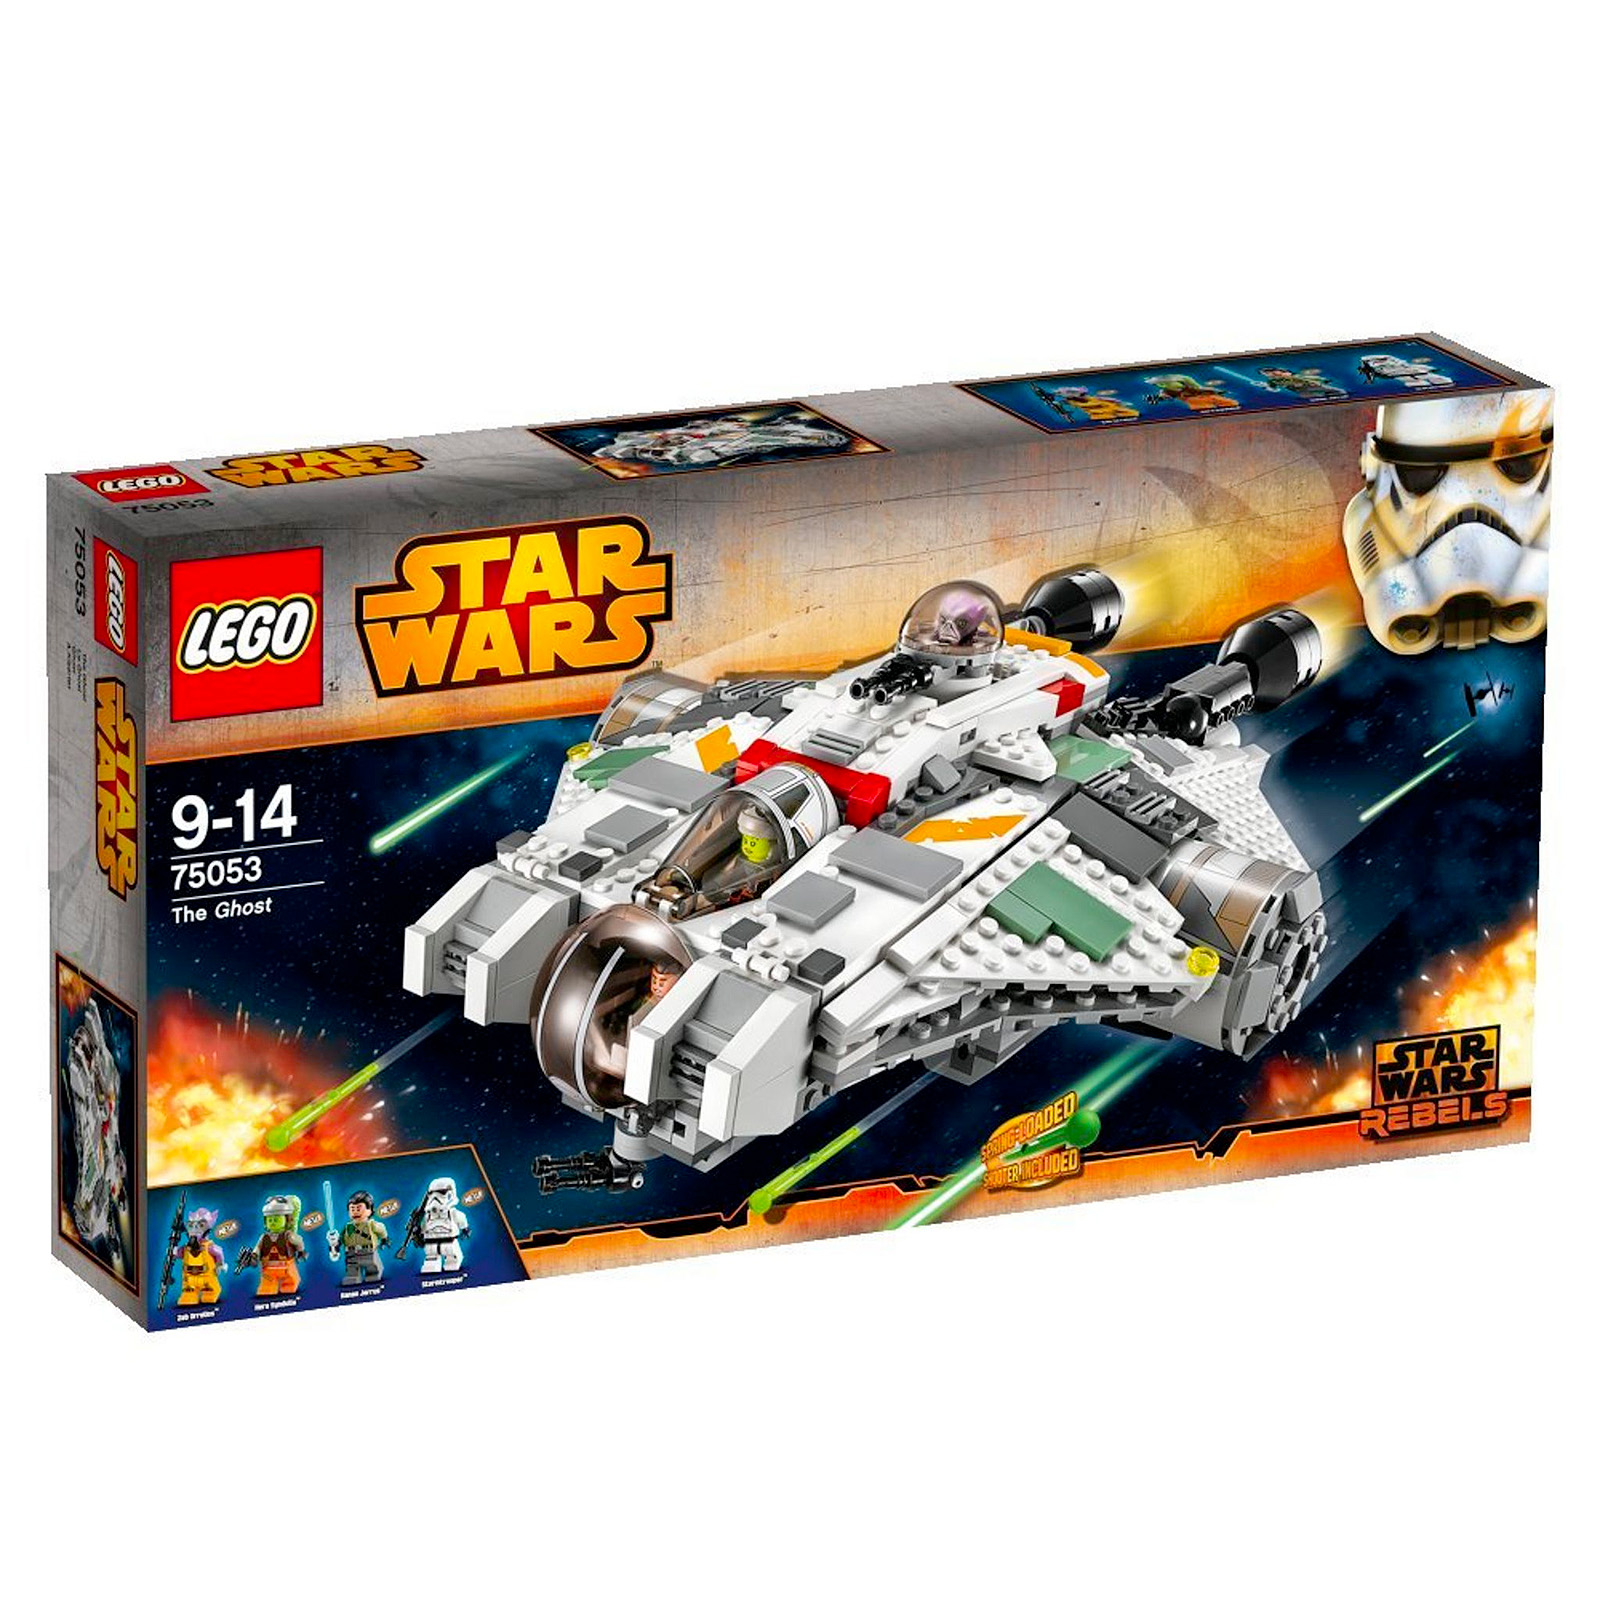 ▻ Très vite testé : LEGO Star Wars 75360 Yoda's Jedi Starfighter - HOTH  BRICKS